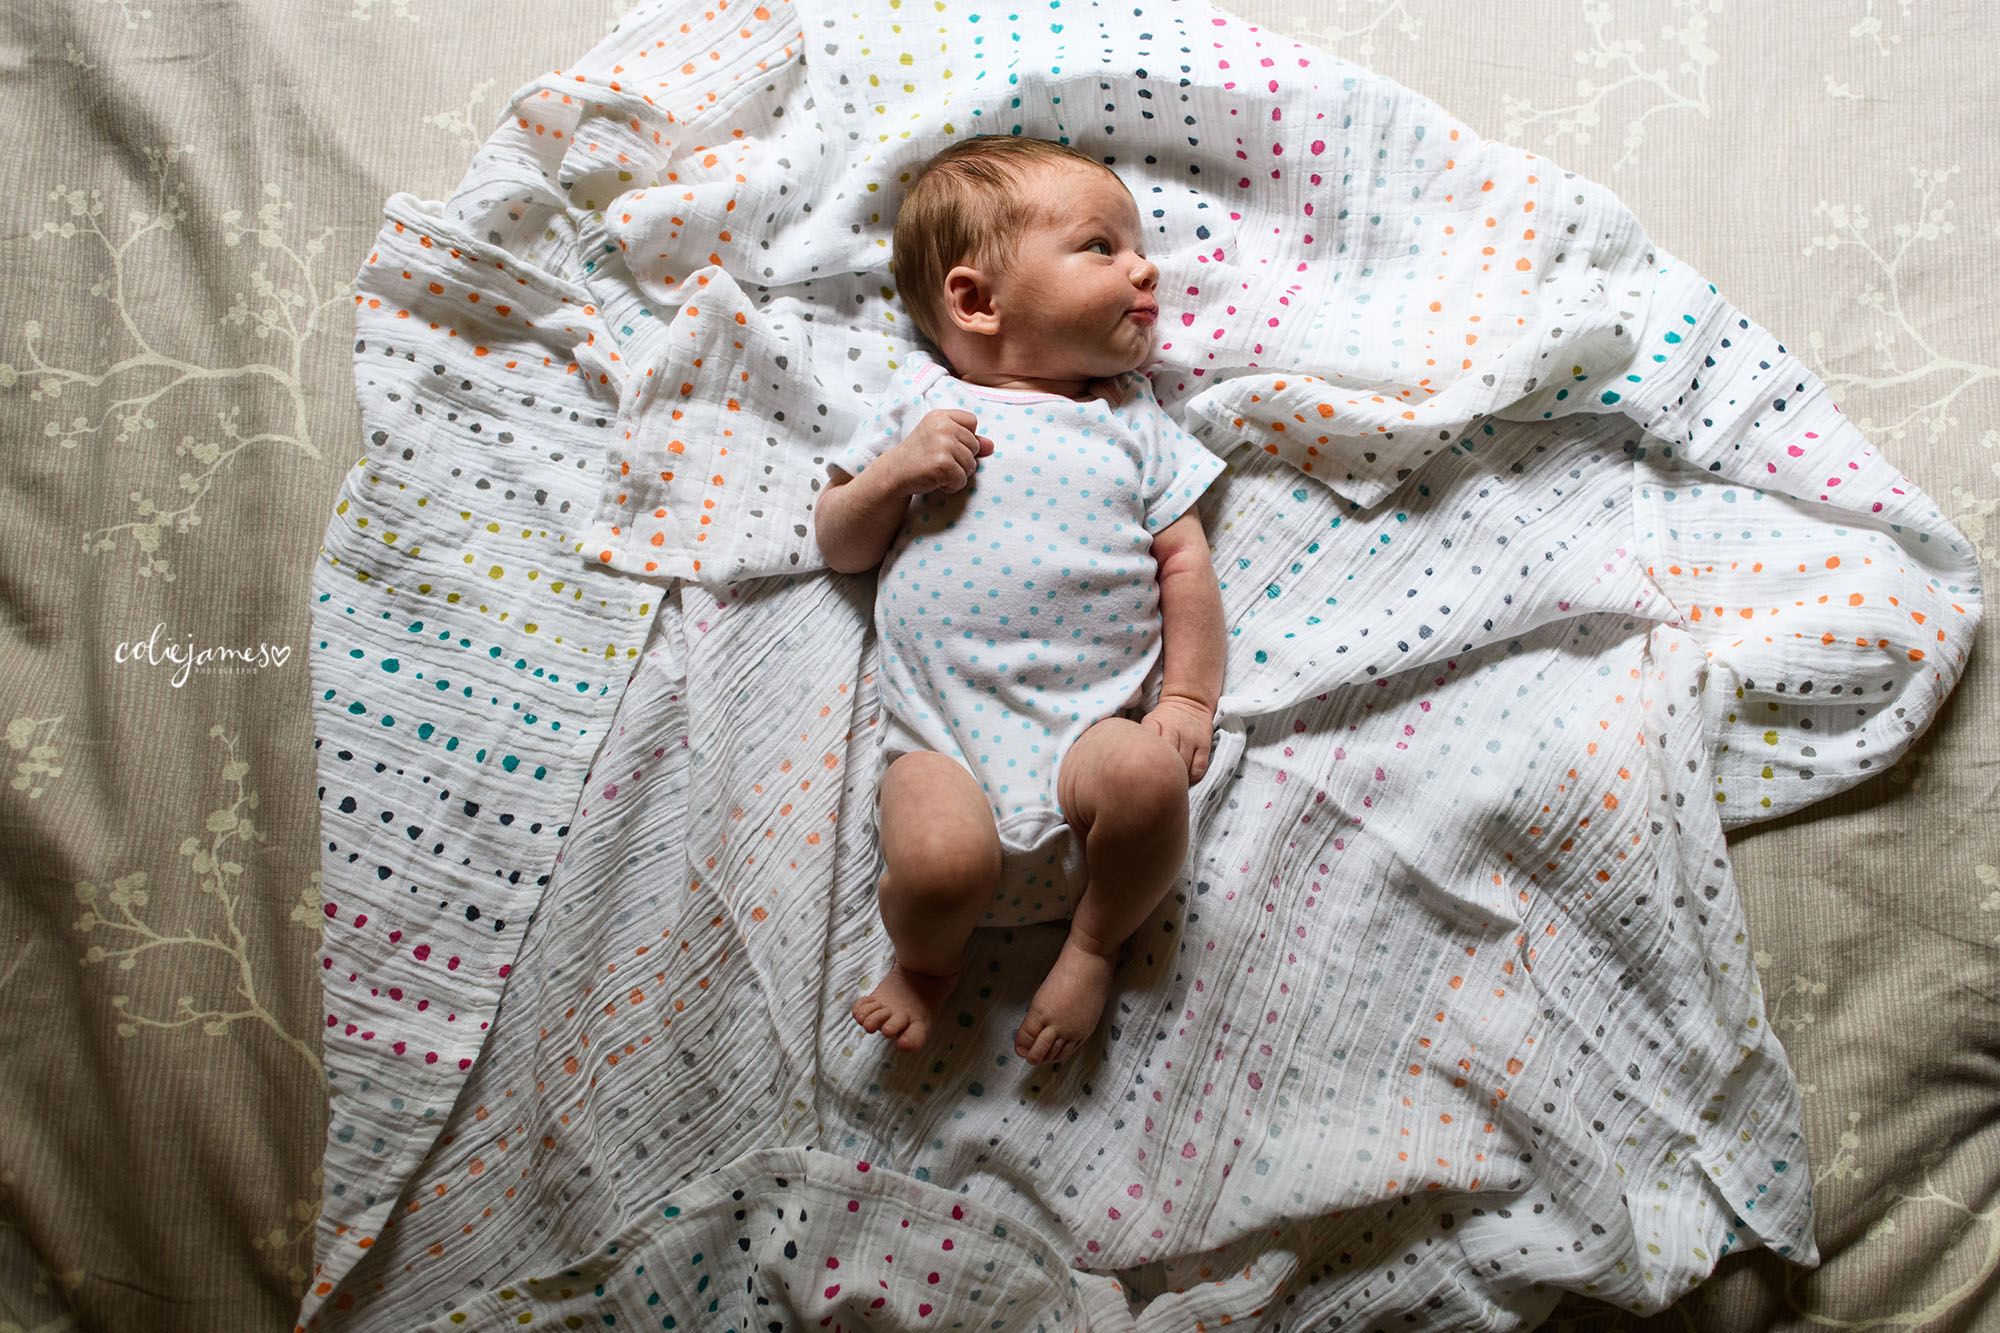 denver in-home newborn photography meet sadie